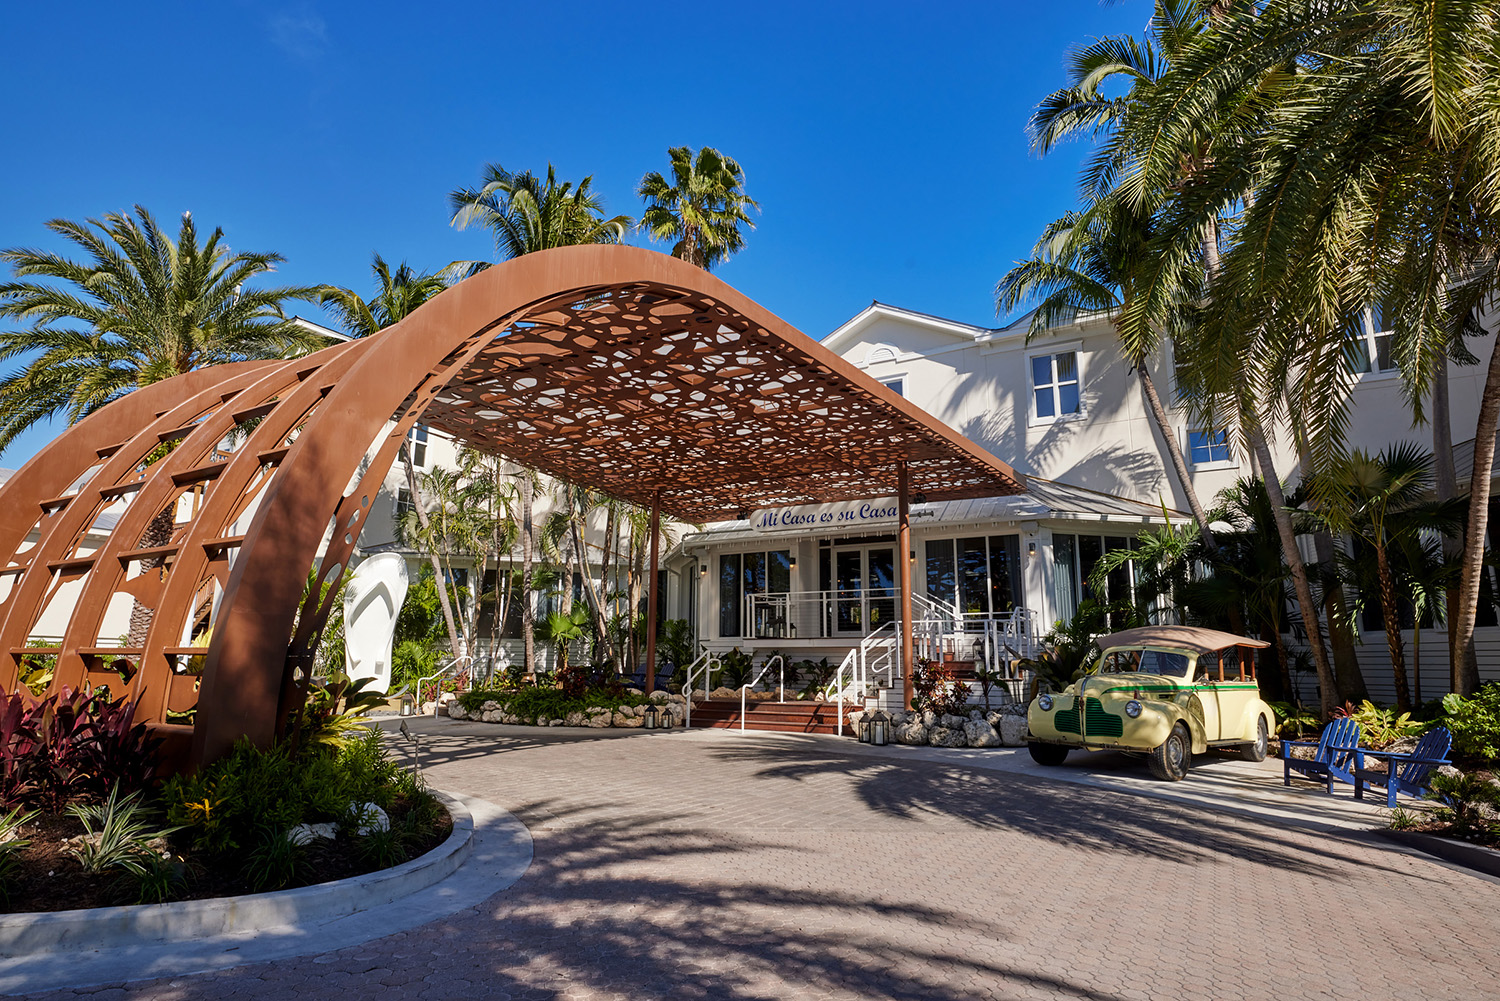 Margaritaville Beach House, Key West